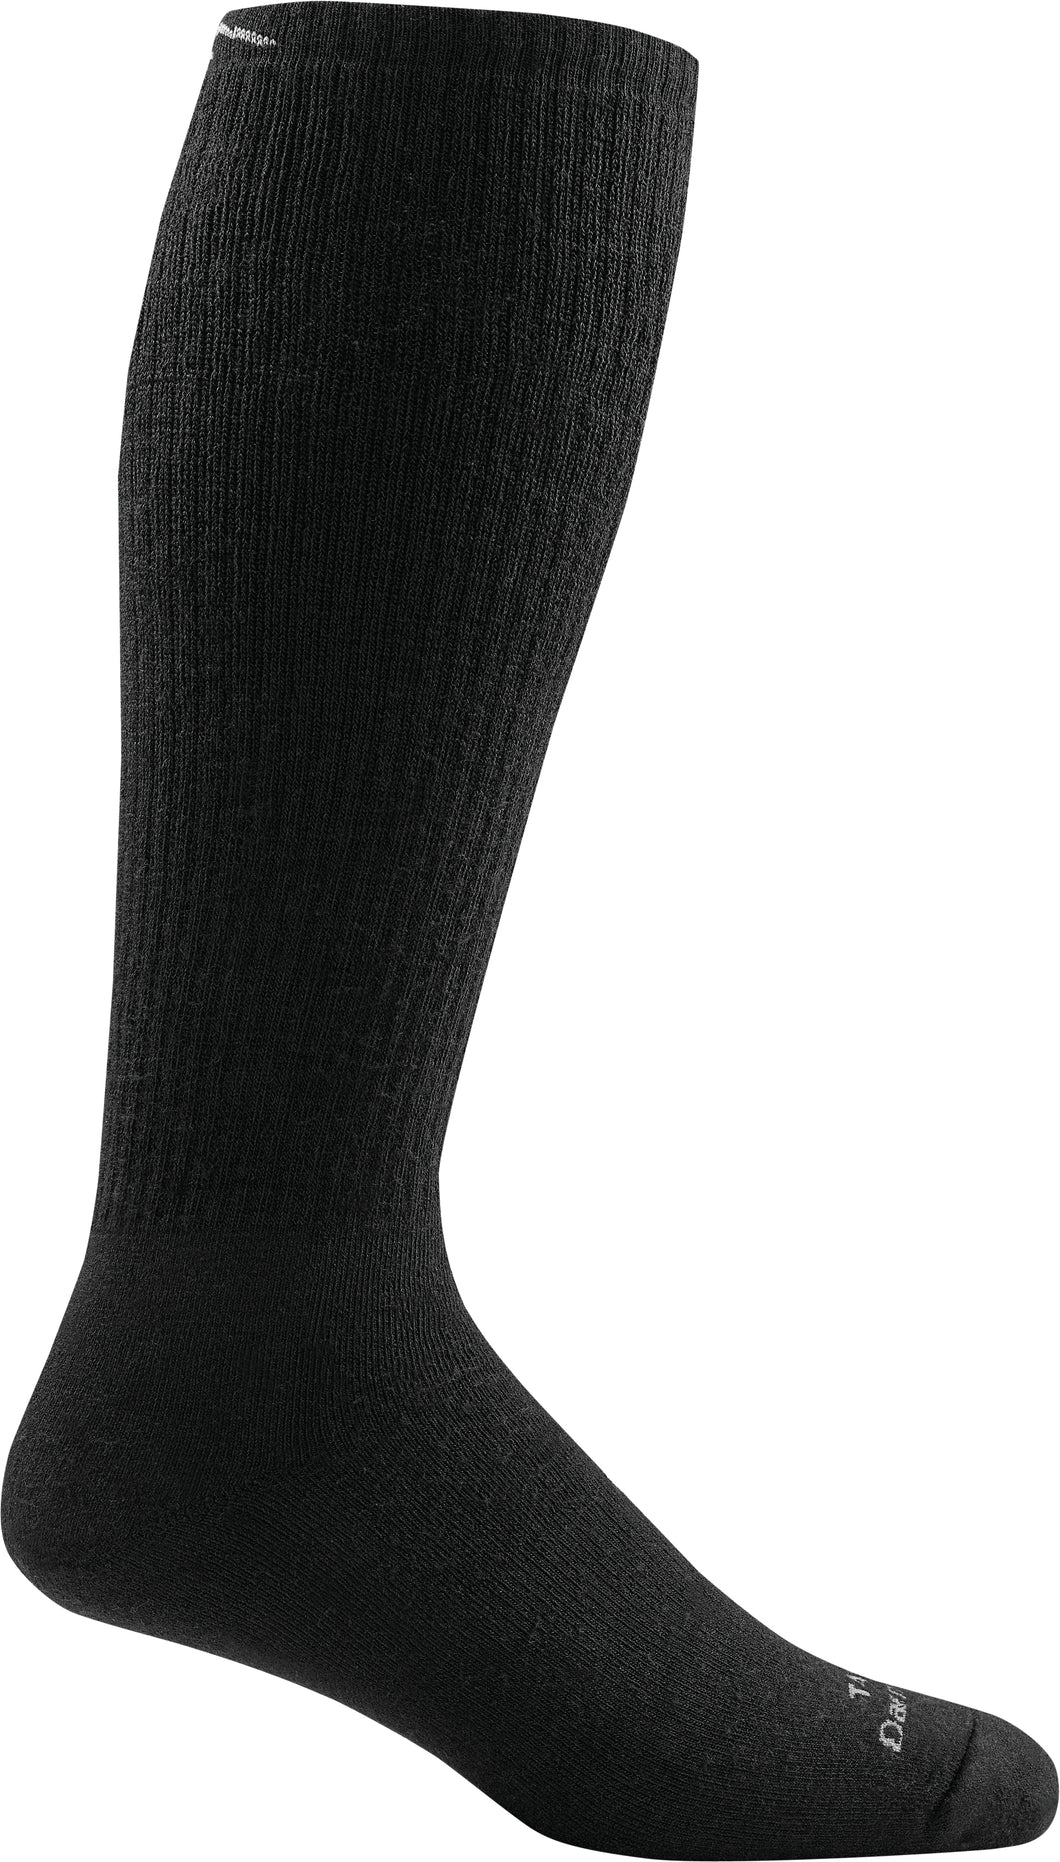 Darn Tough T4050 Tactical Series Merino Wool Heavyweight Over-the-Calf Socks with Full Cushion